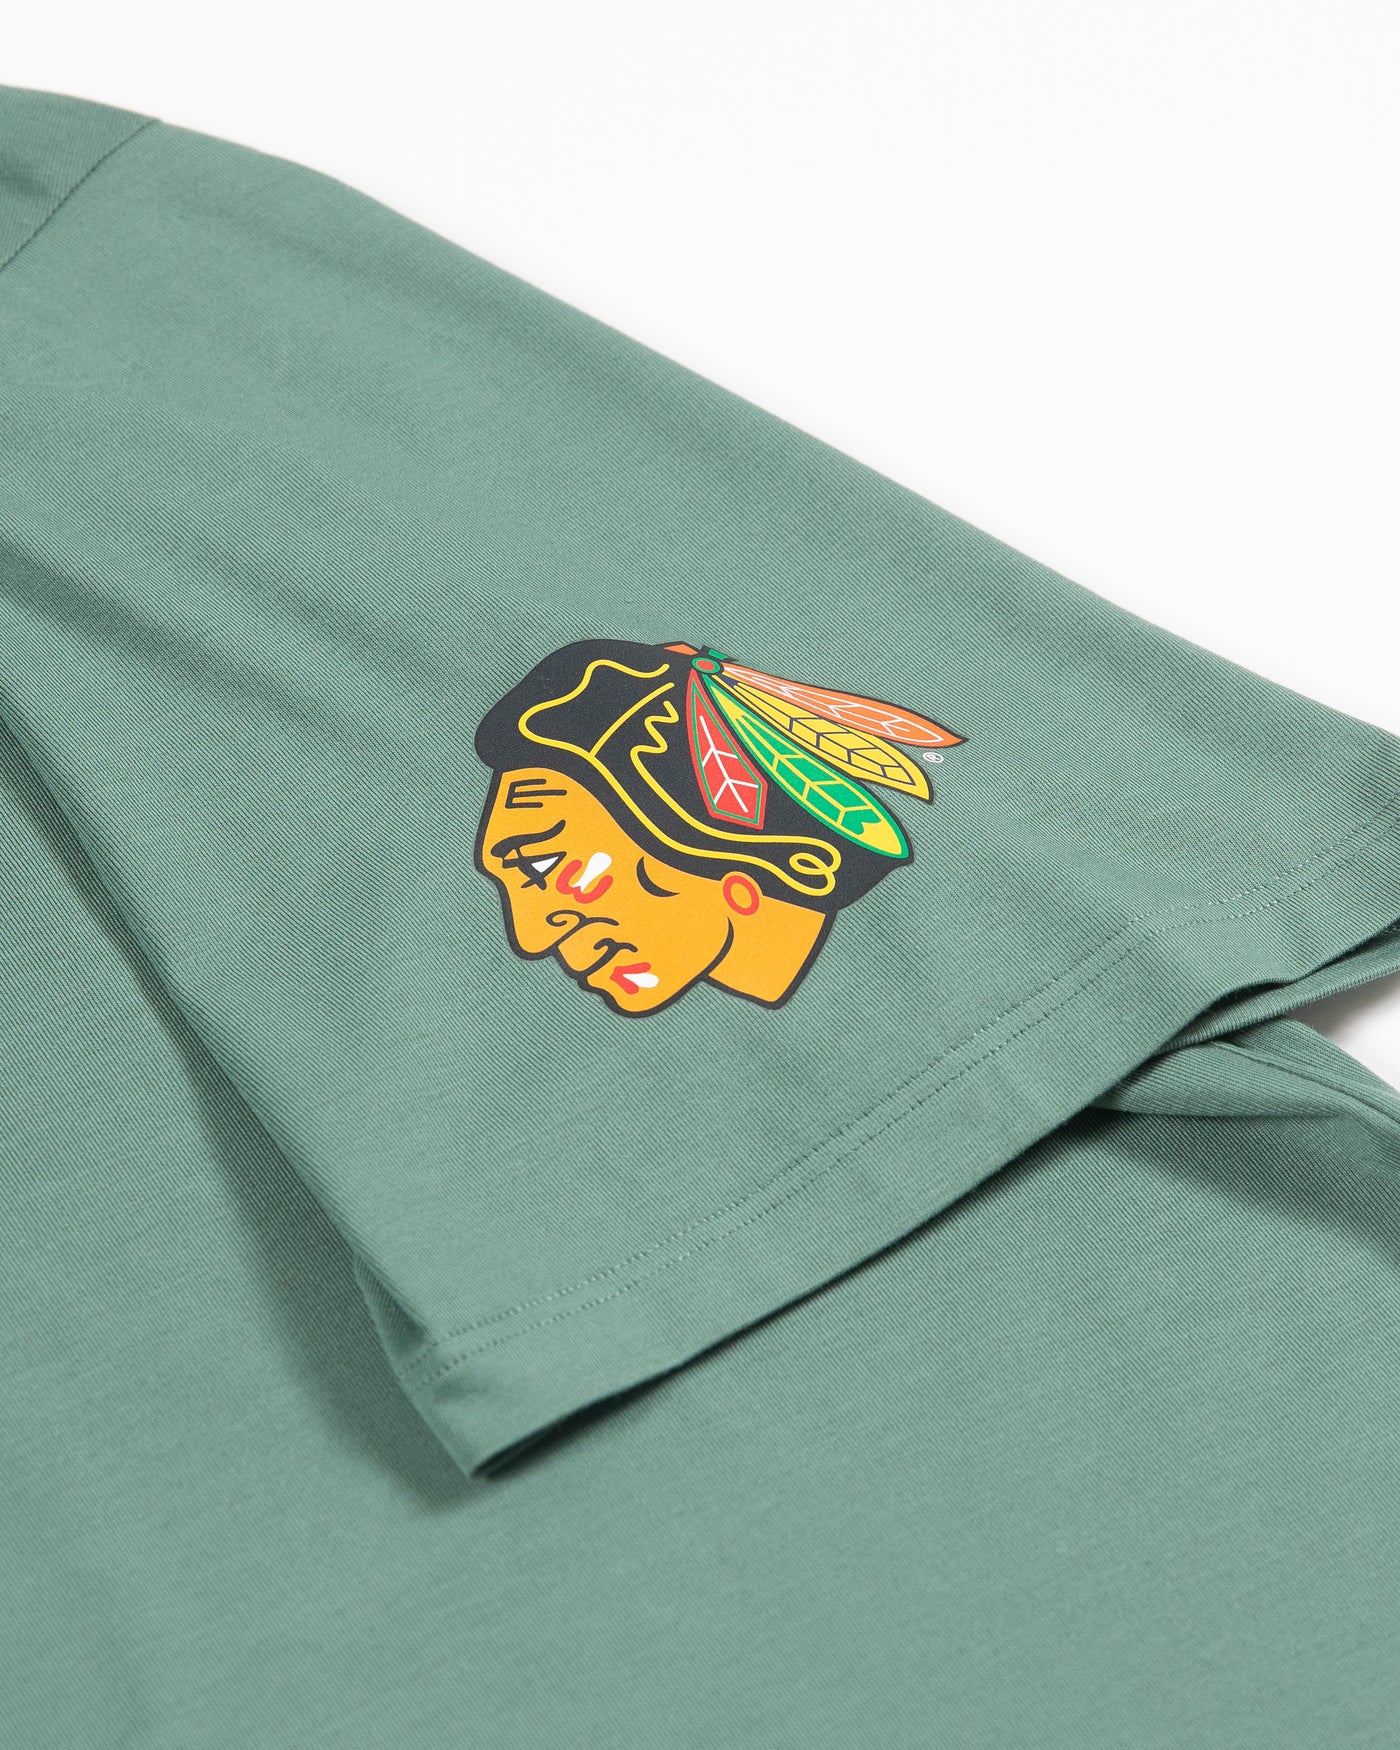 green lululemon t-shirt with Chicago Blackhawks primary logo on left shoulder - detail lay flat